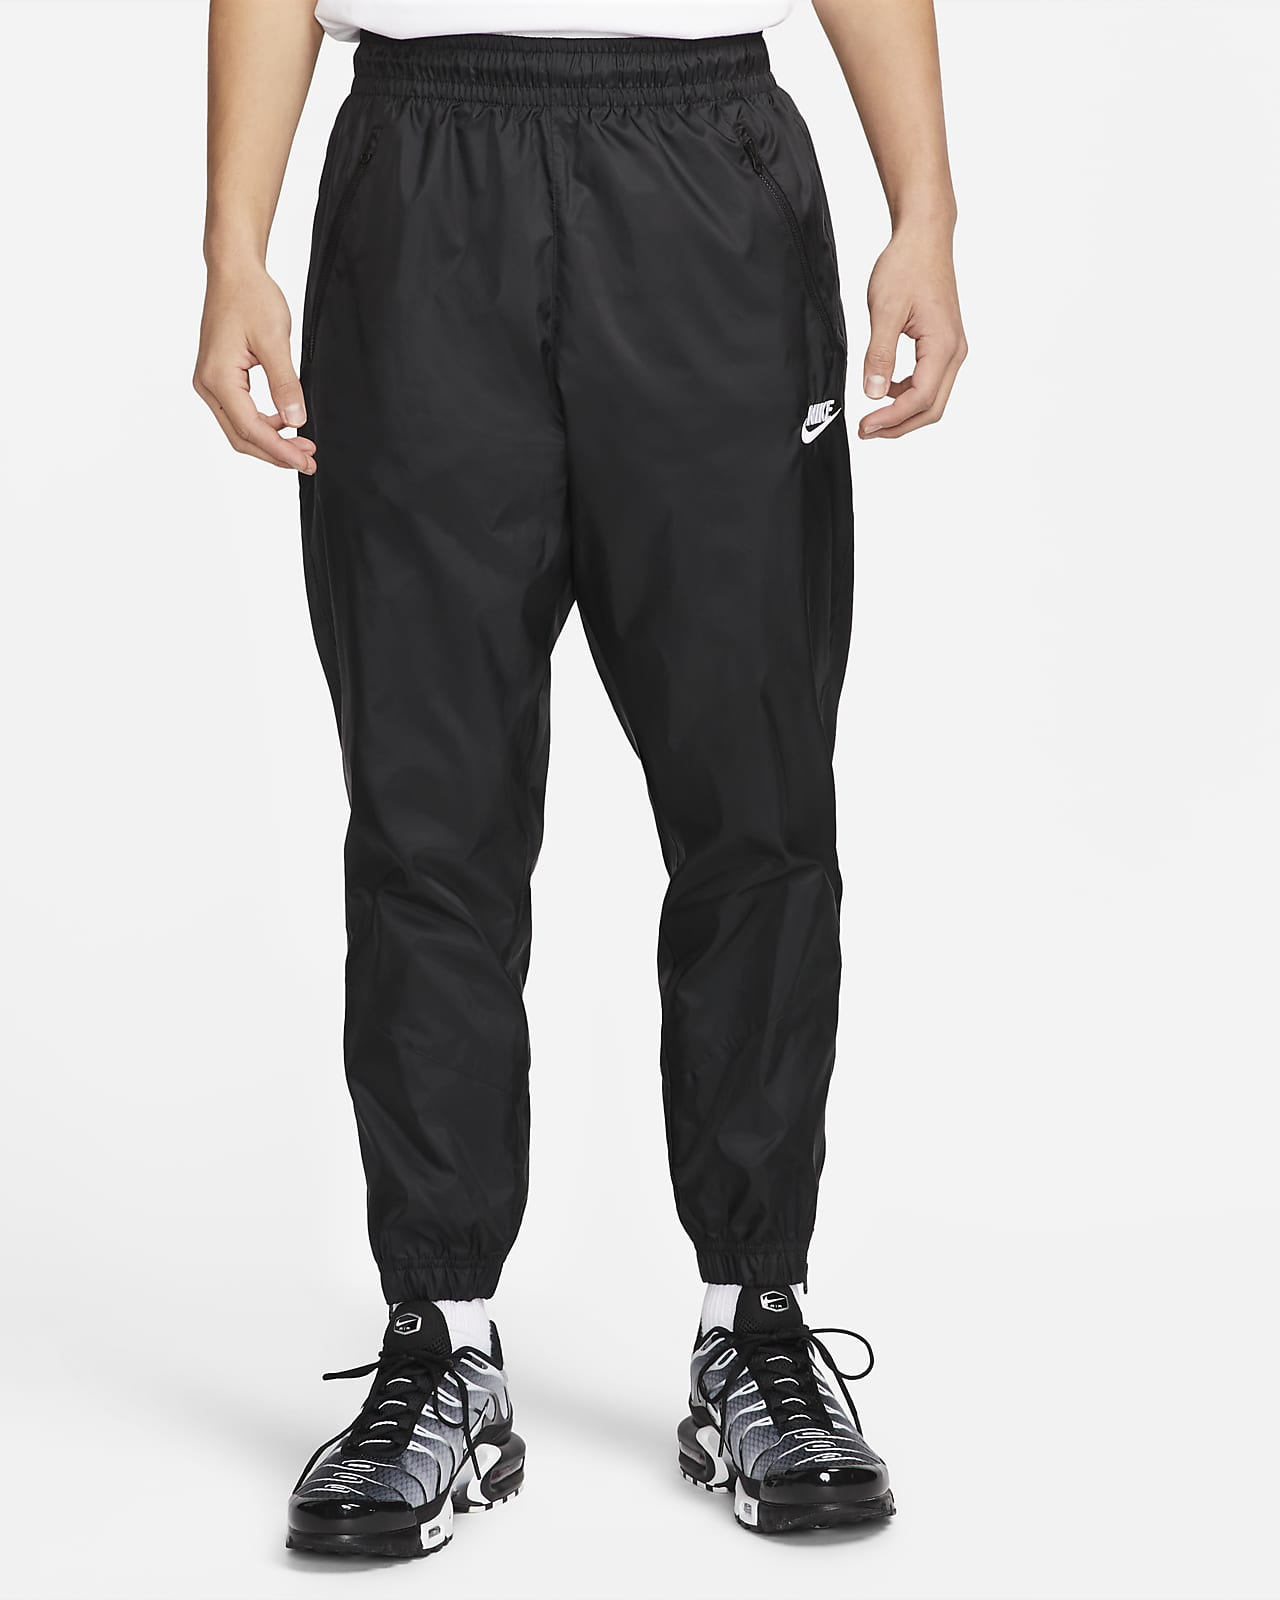 Nike Sportswear Windrunner Track Pants Black Mens Size XL CN8774-010 NWT |  eBay